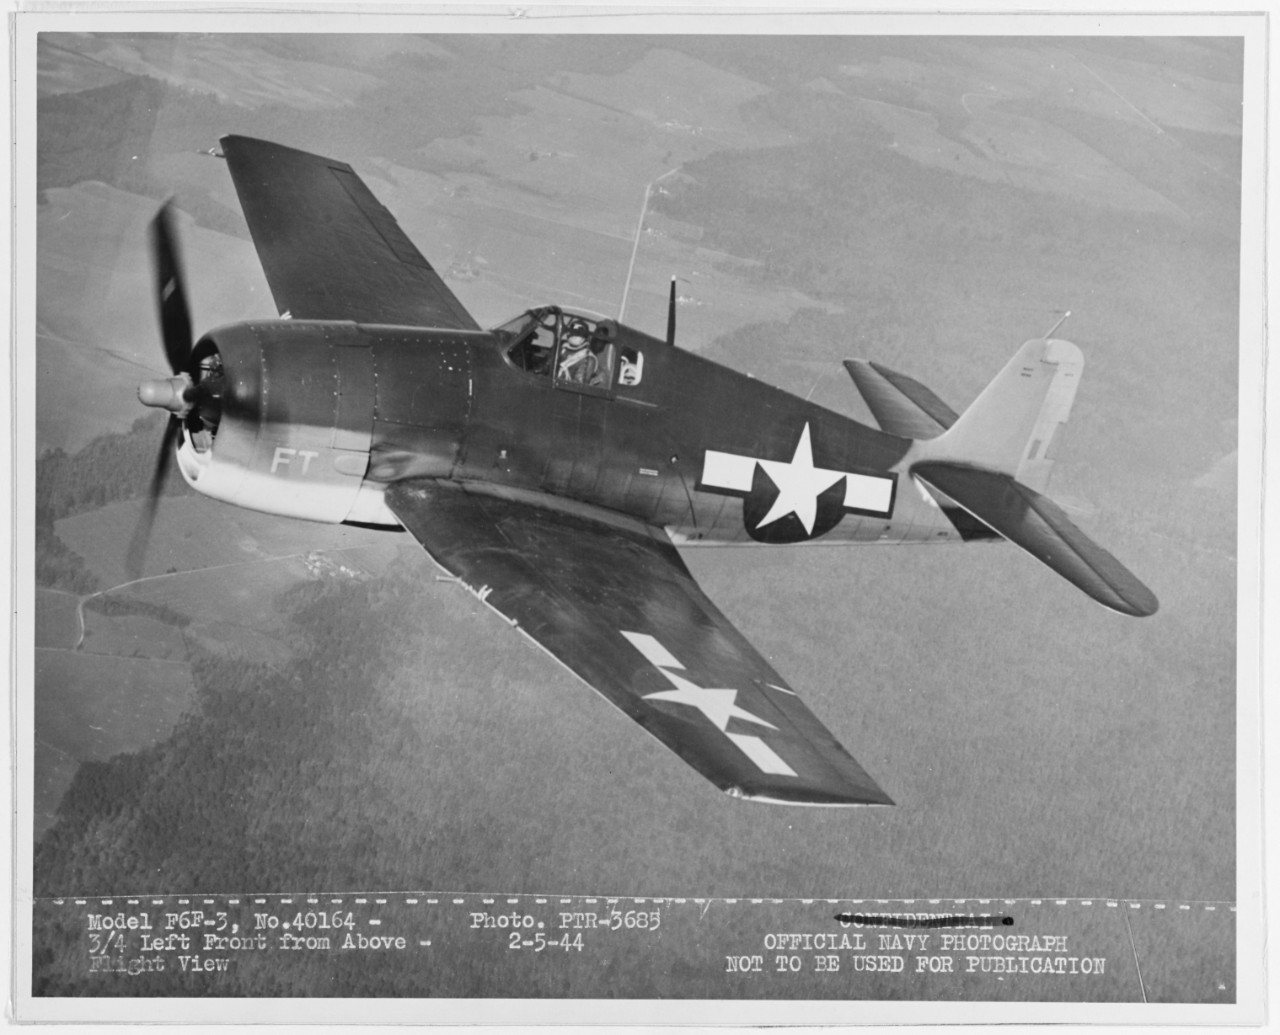 Grumman F6F-3 (Bu# 40164)